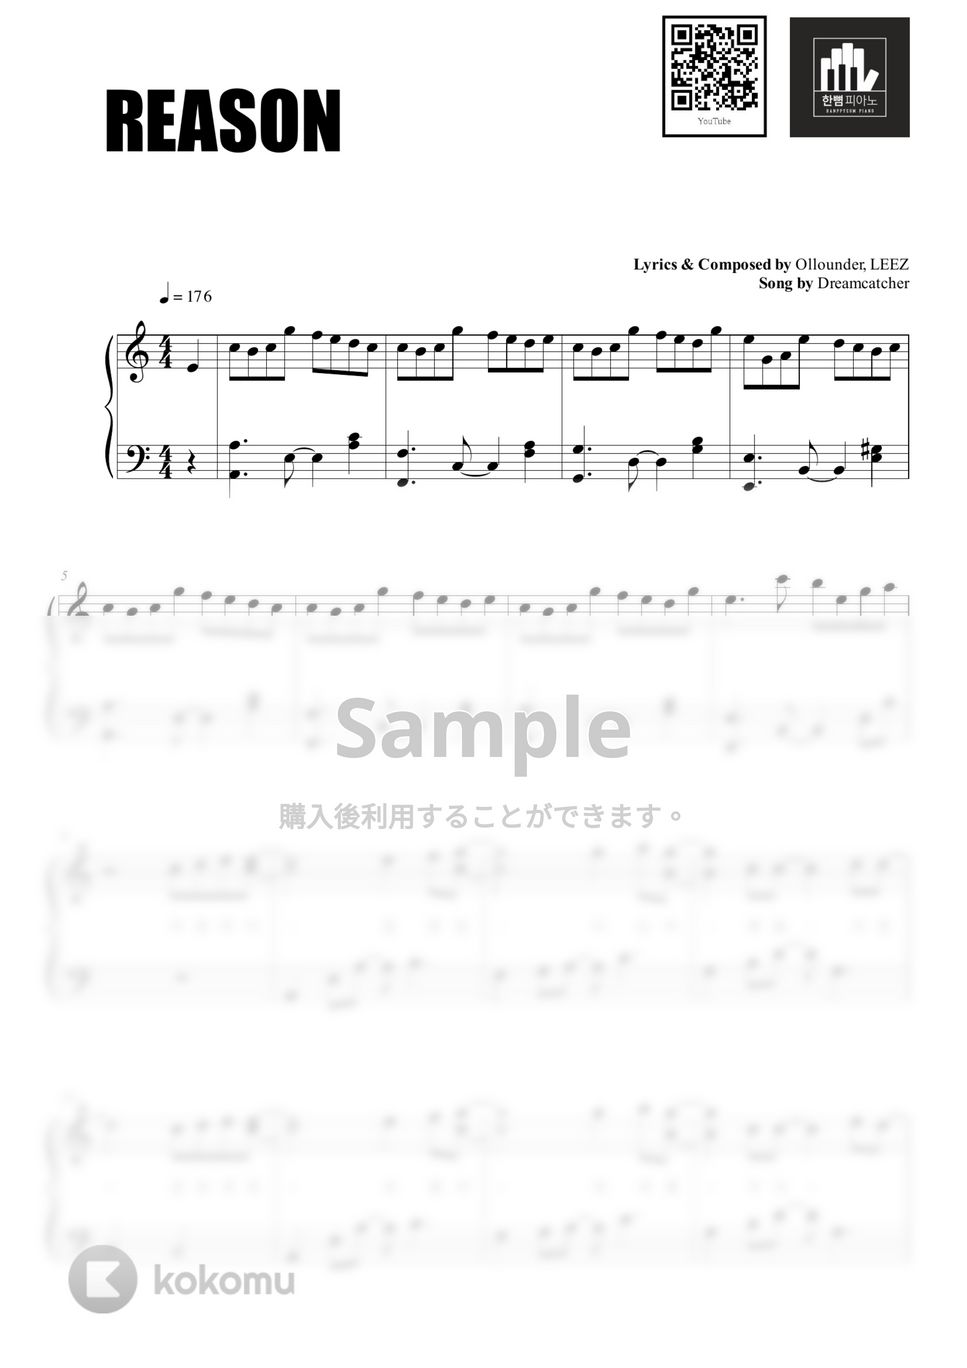 Dreamcatcher - REASON (PIANO COVER) by HANPPYEOMPIANO